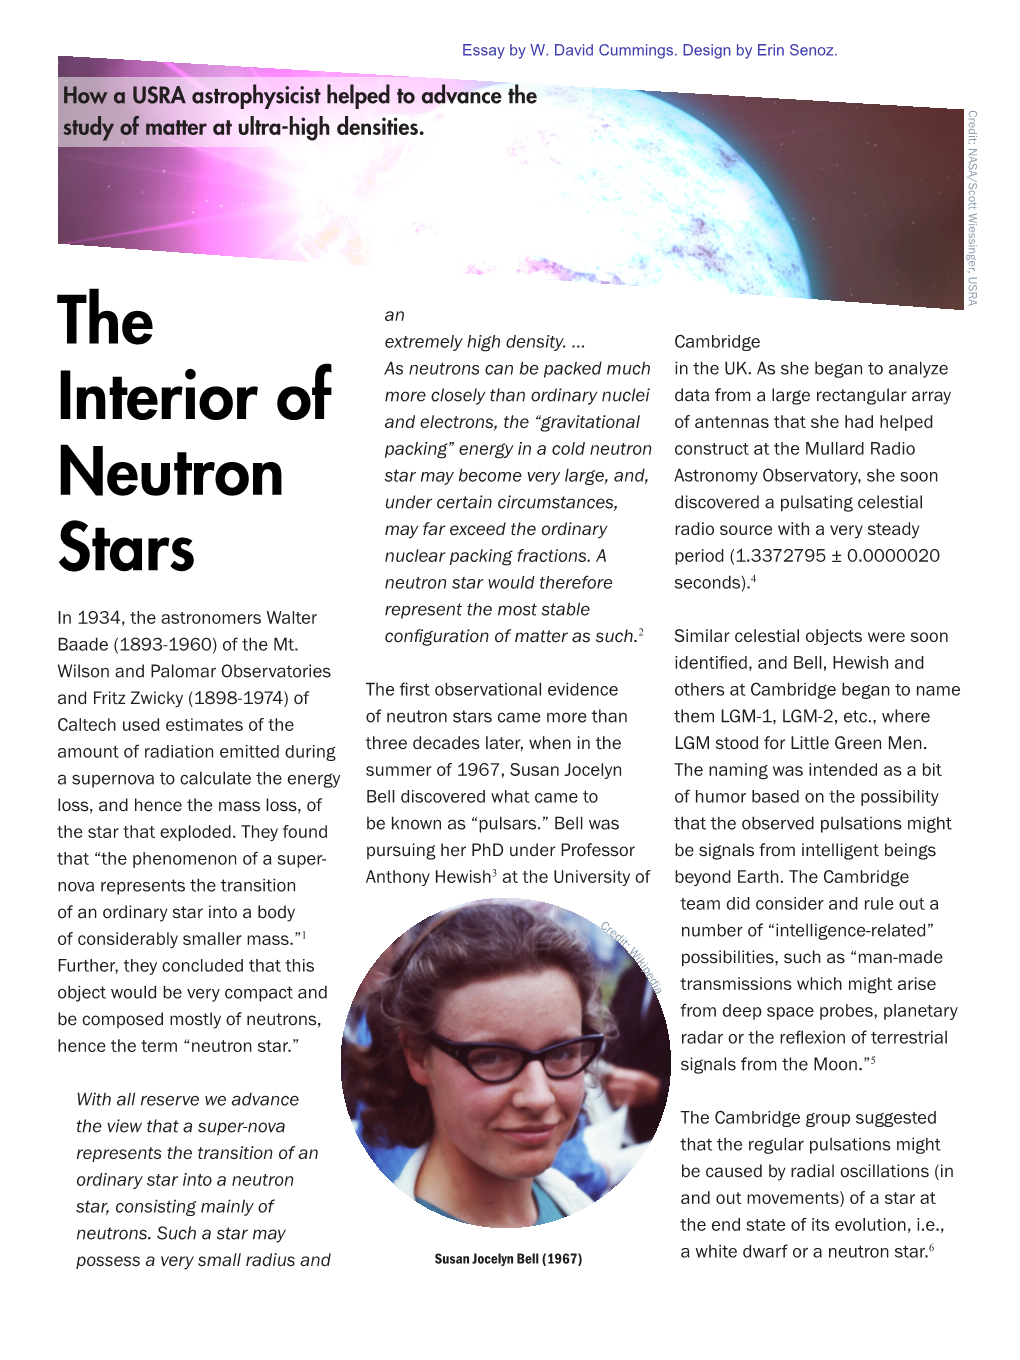 The Interior of Neutron Stars) Credit: Aaron Clamage